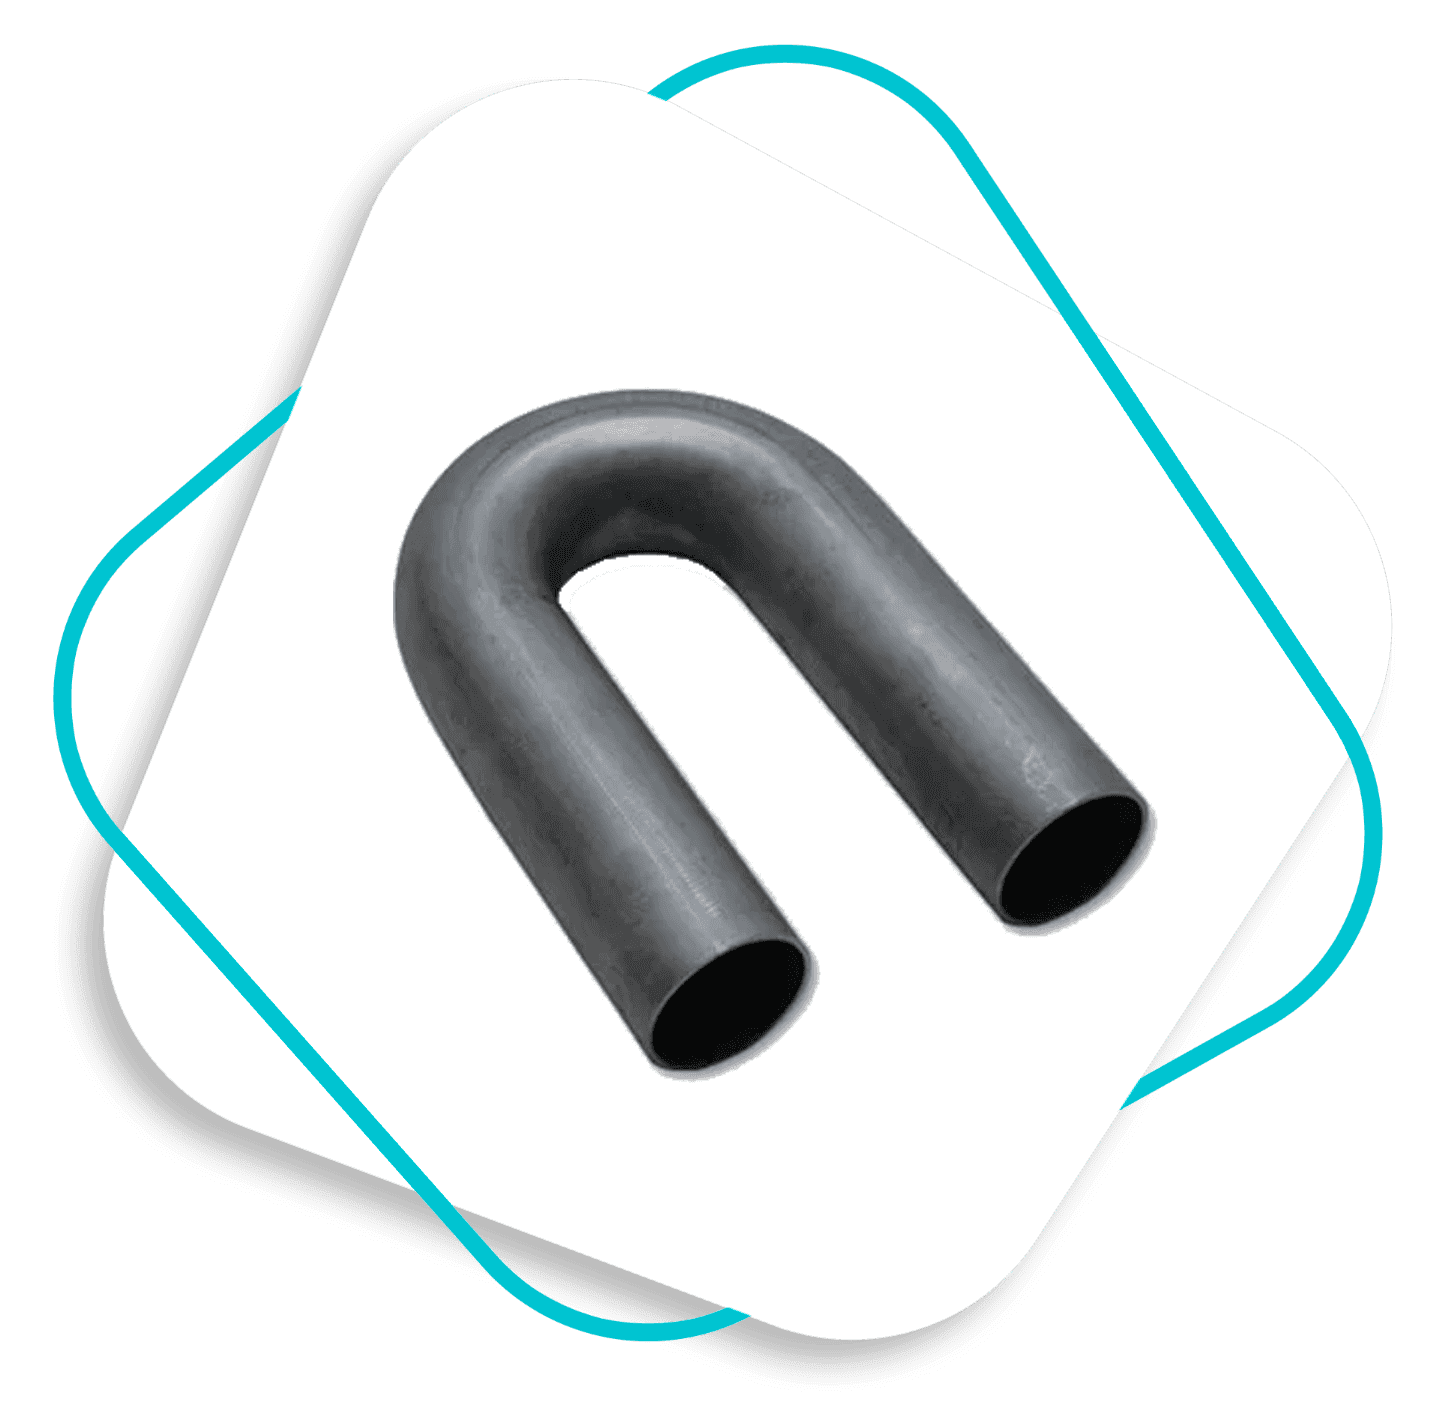 Carbon Steel Bend